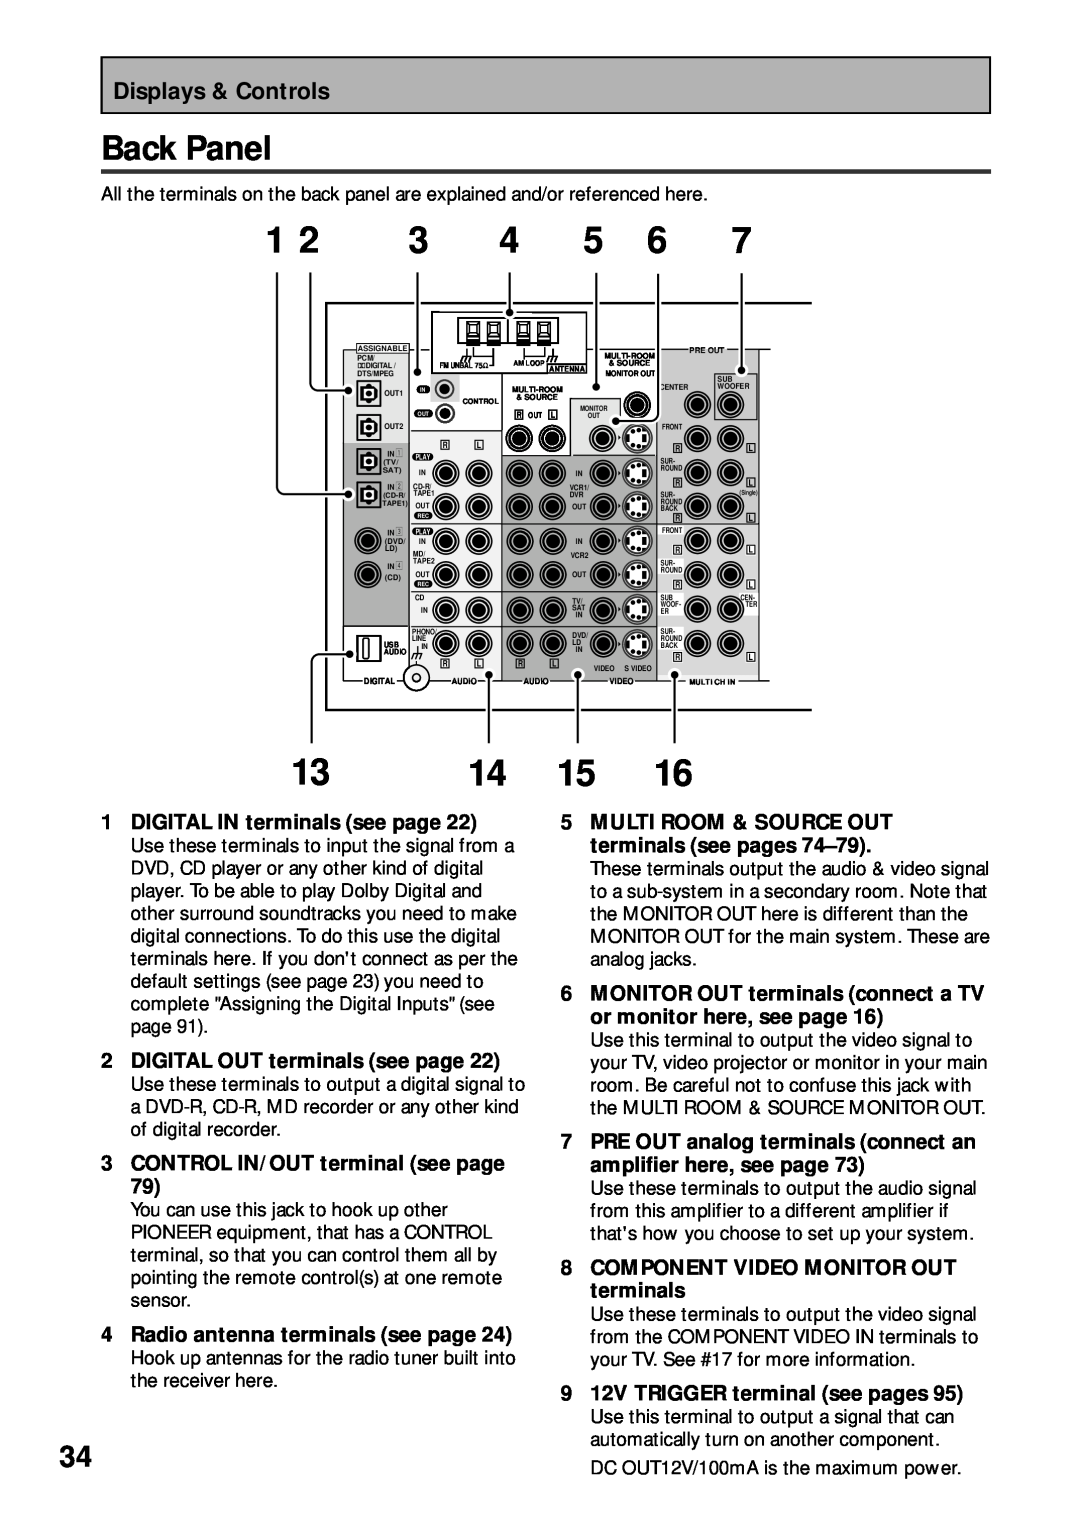 Pioneer VSX-45TX manual 13 14 15, Back Panel, Displays & Controls, 1DIGITAL IN terminals see page 